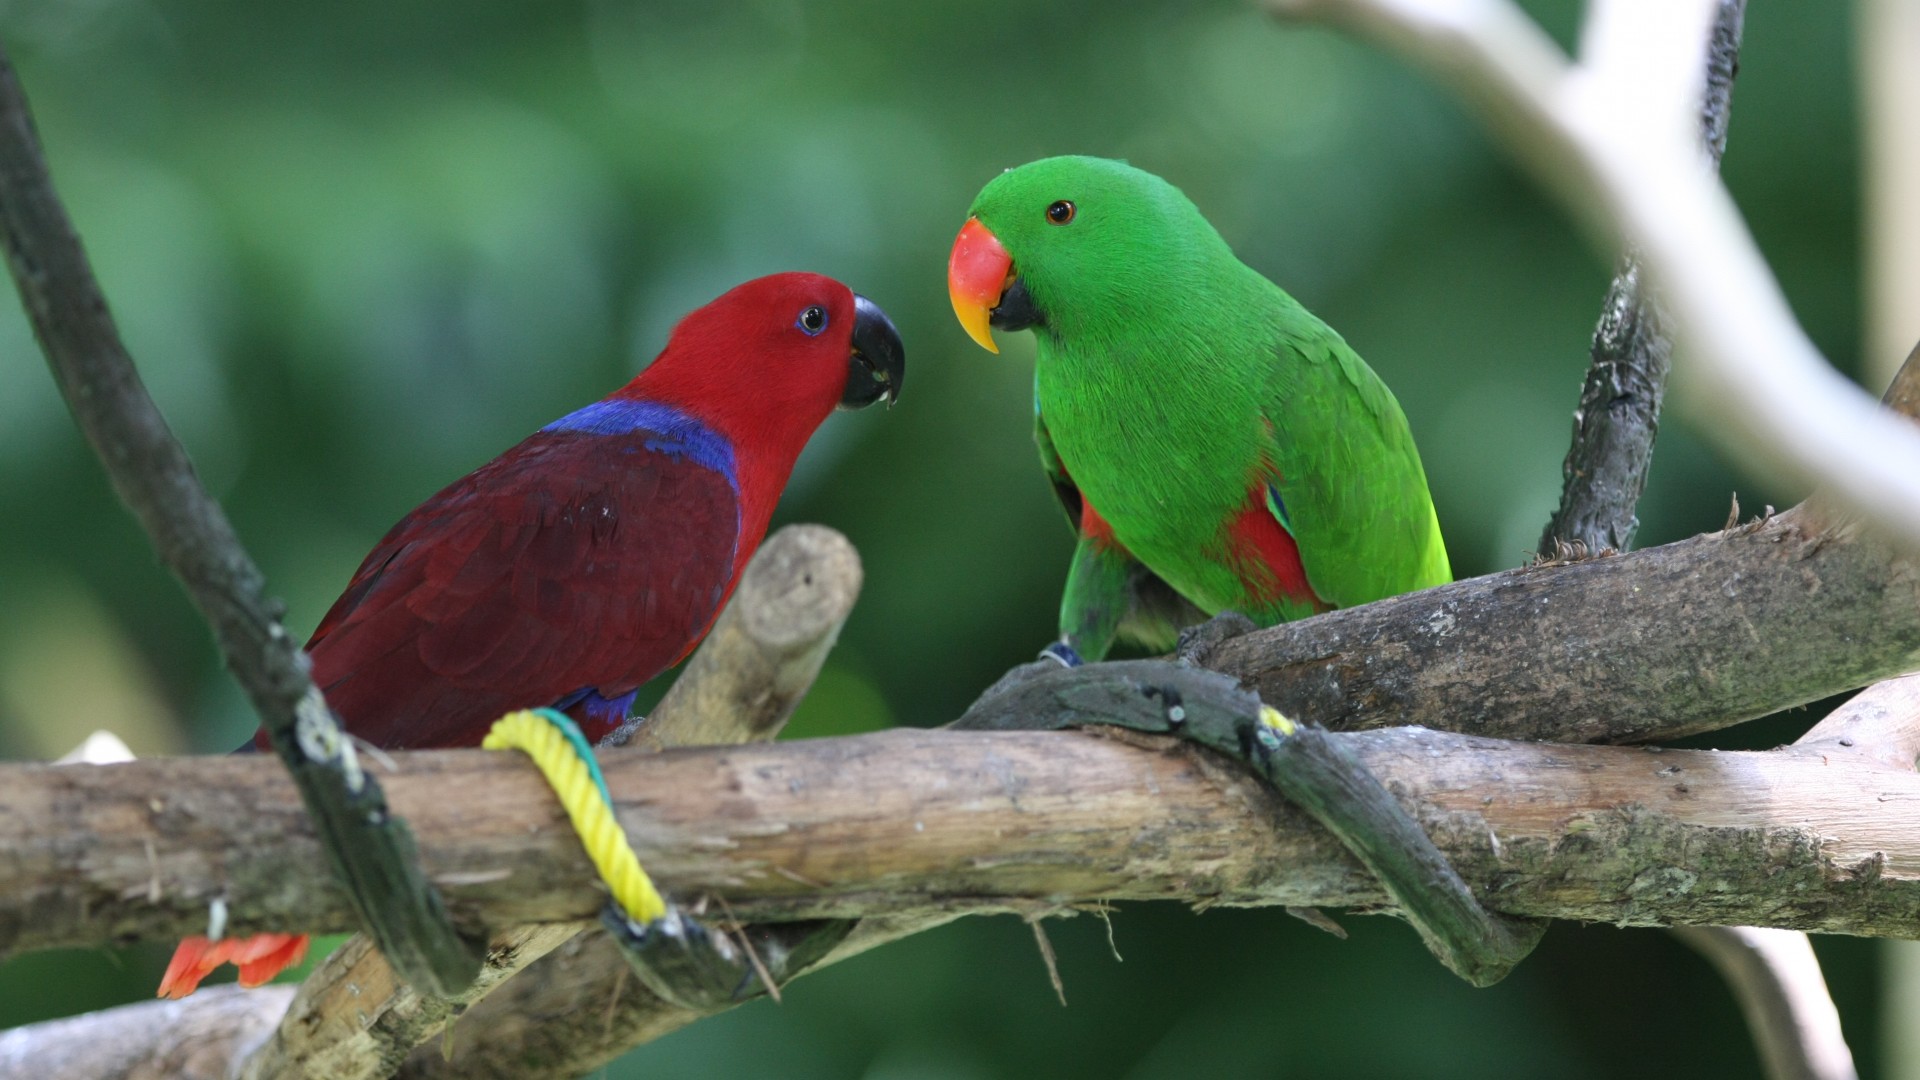 амазонские попугаи, птица, зеленая, красная, природа, животное, туризм, ветка, Amazon parrot, Antilles island, bird, green, red, nature, tourism, branch, animal (horizontal)